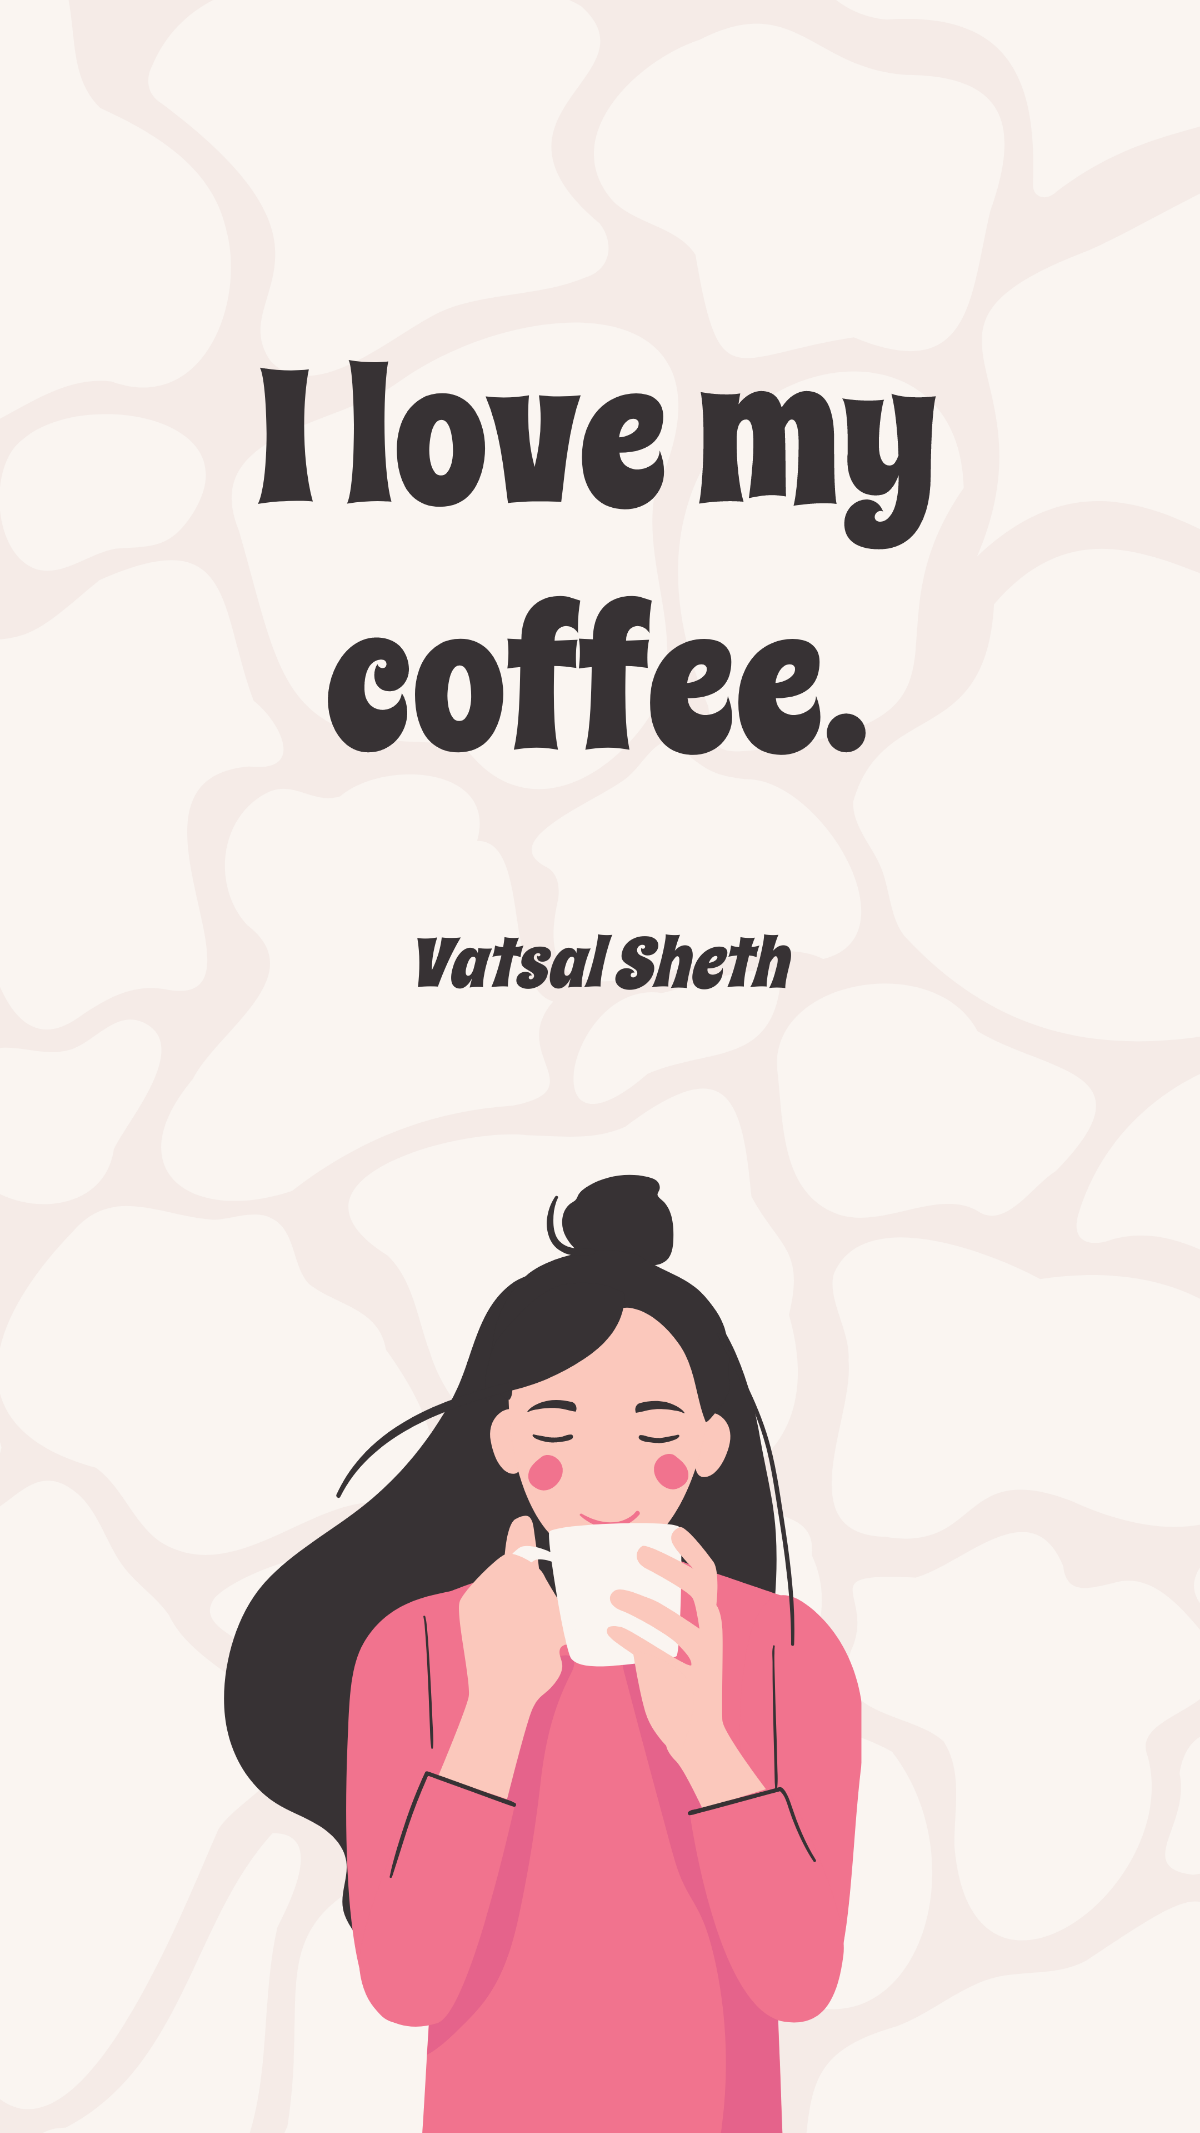 Vatsal Sheth - I love my coffee. Template